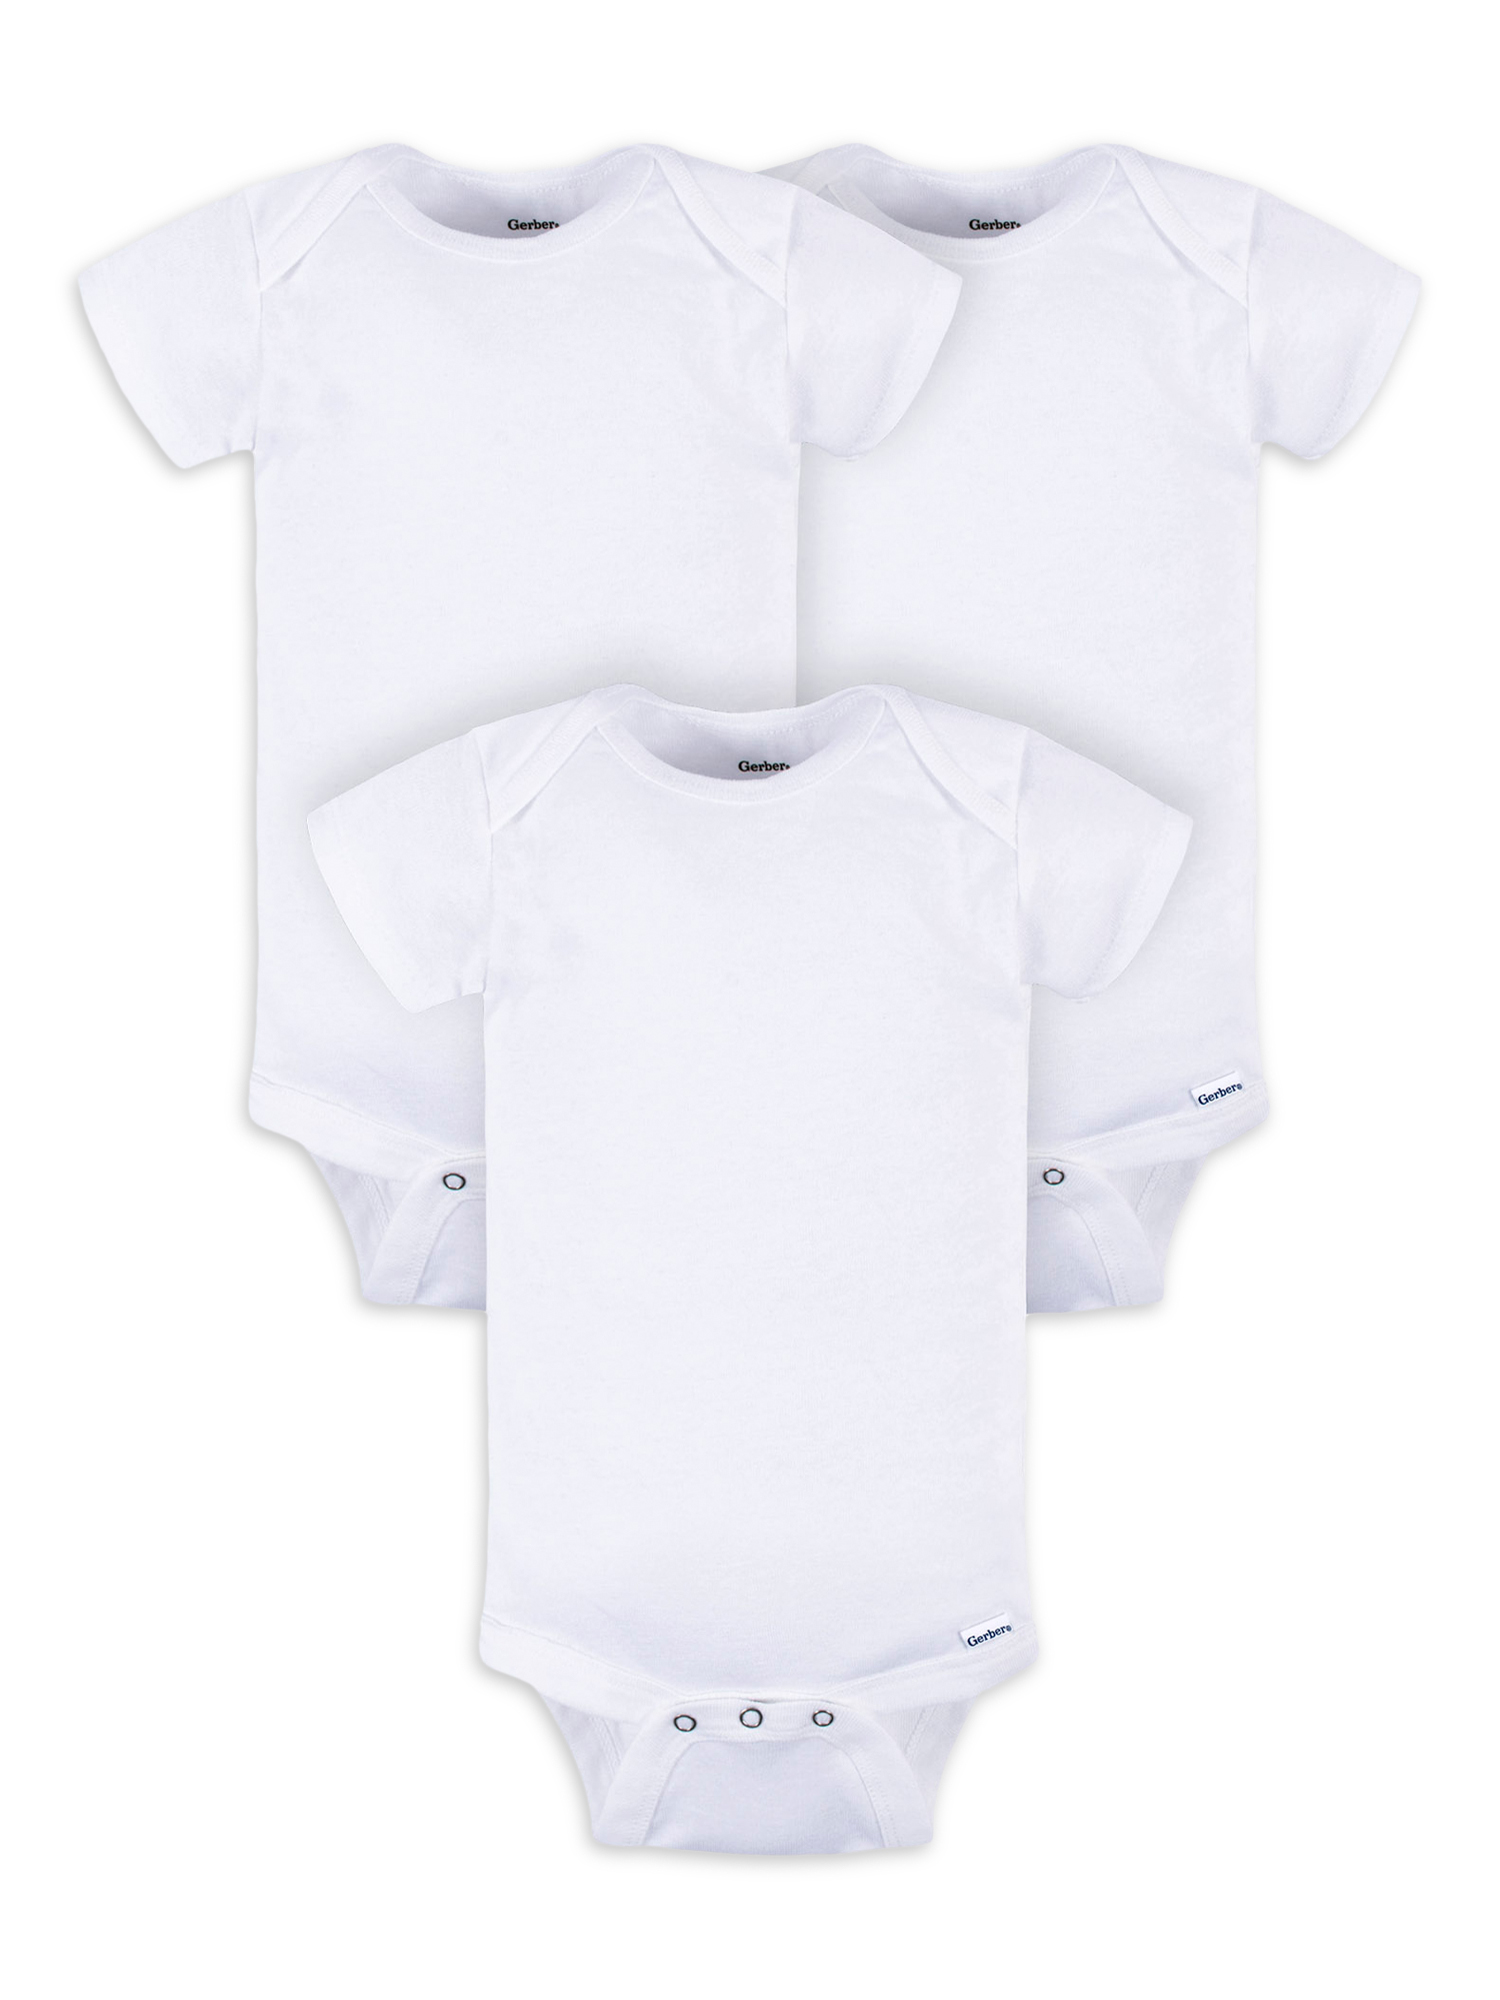 Gerber Baby Boy or Girl Unisex White Short Sleeve Cotton Bodysuit, 3-Pack, Sizes Preemie - 24 Months - image 1 of 12